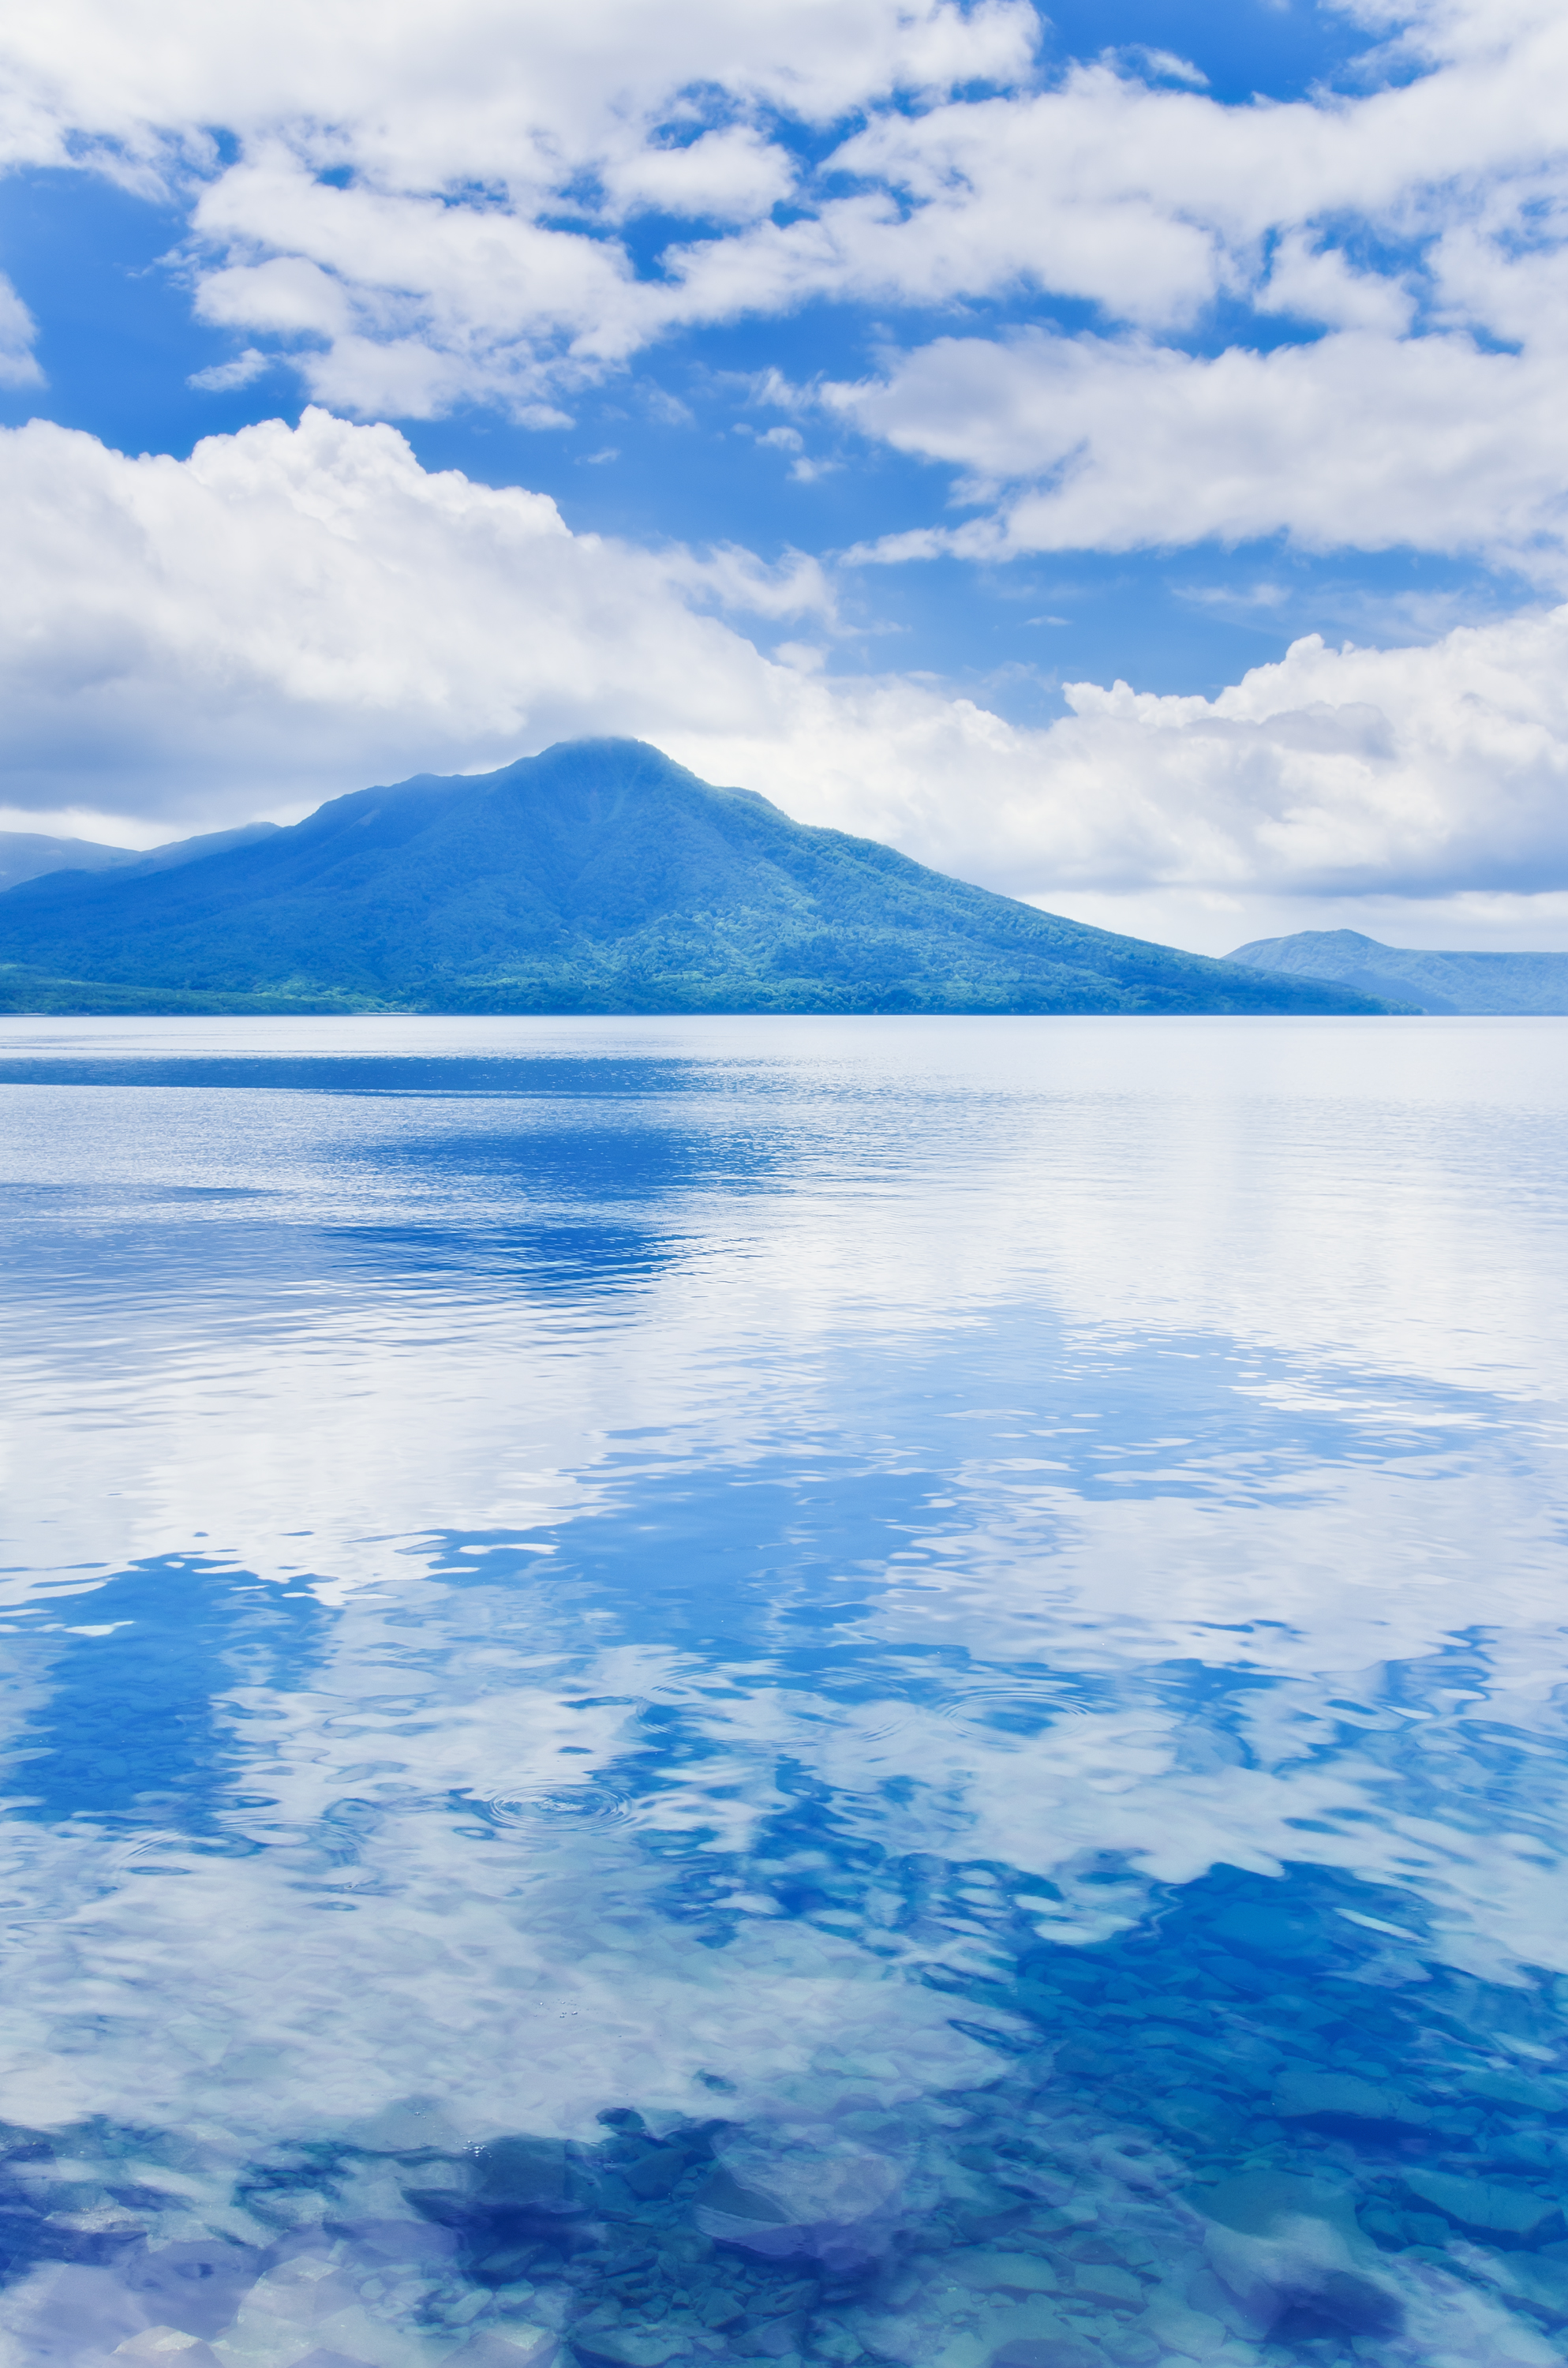 Mountain Lake Clouds Reflection Blue